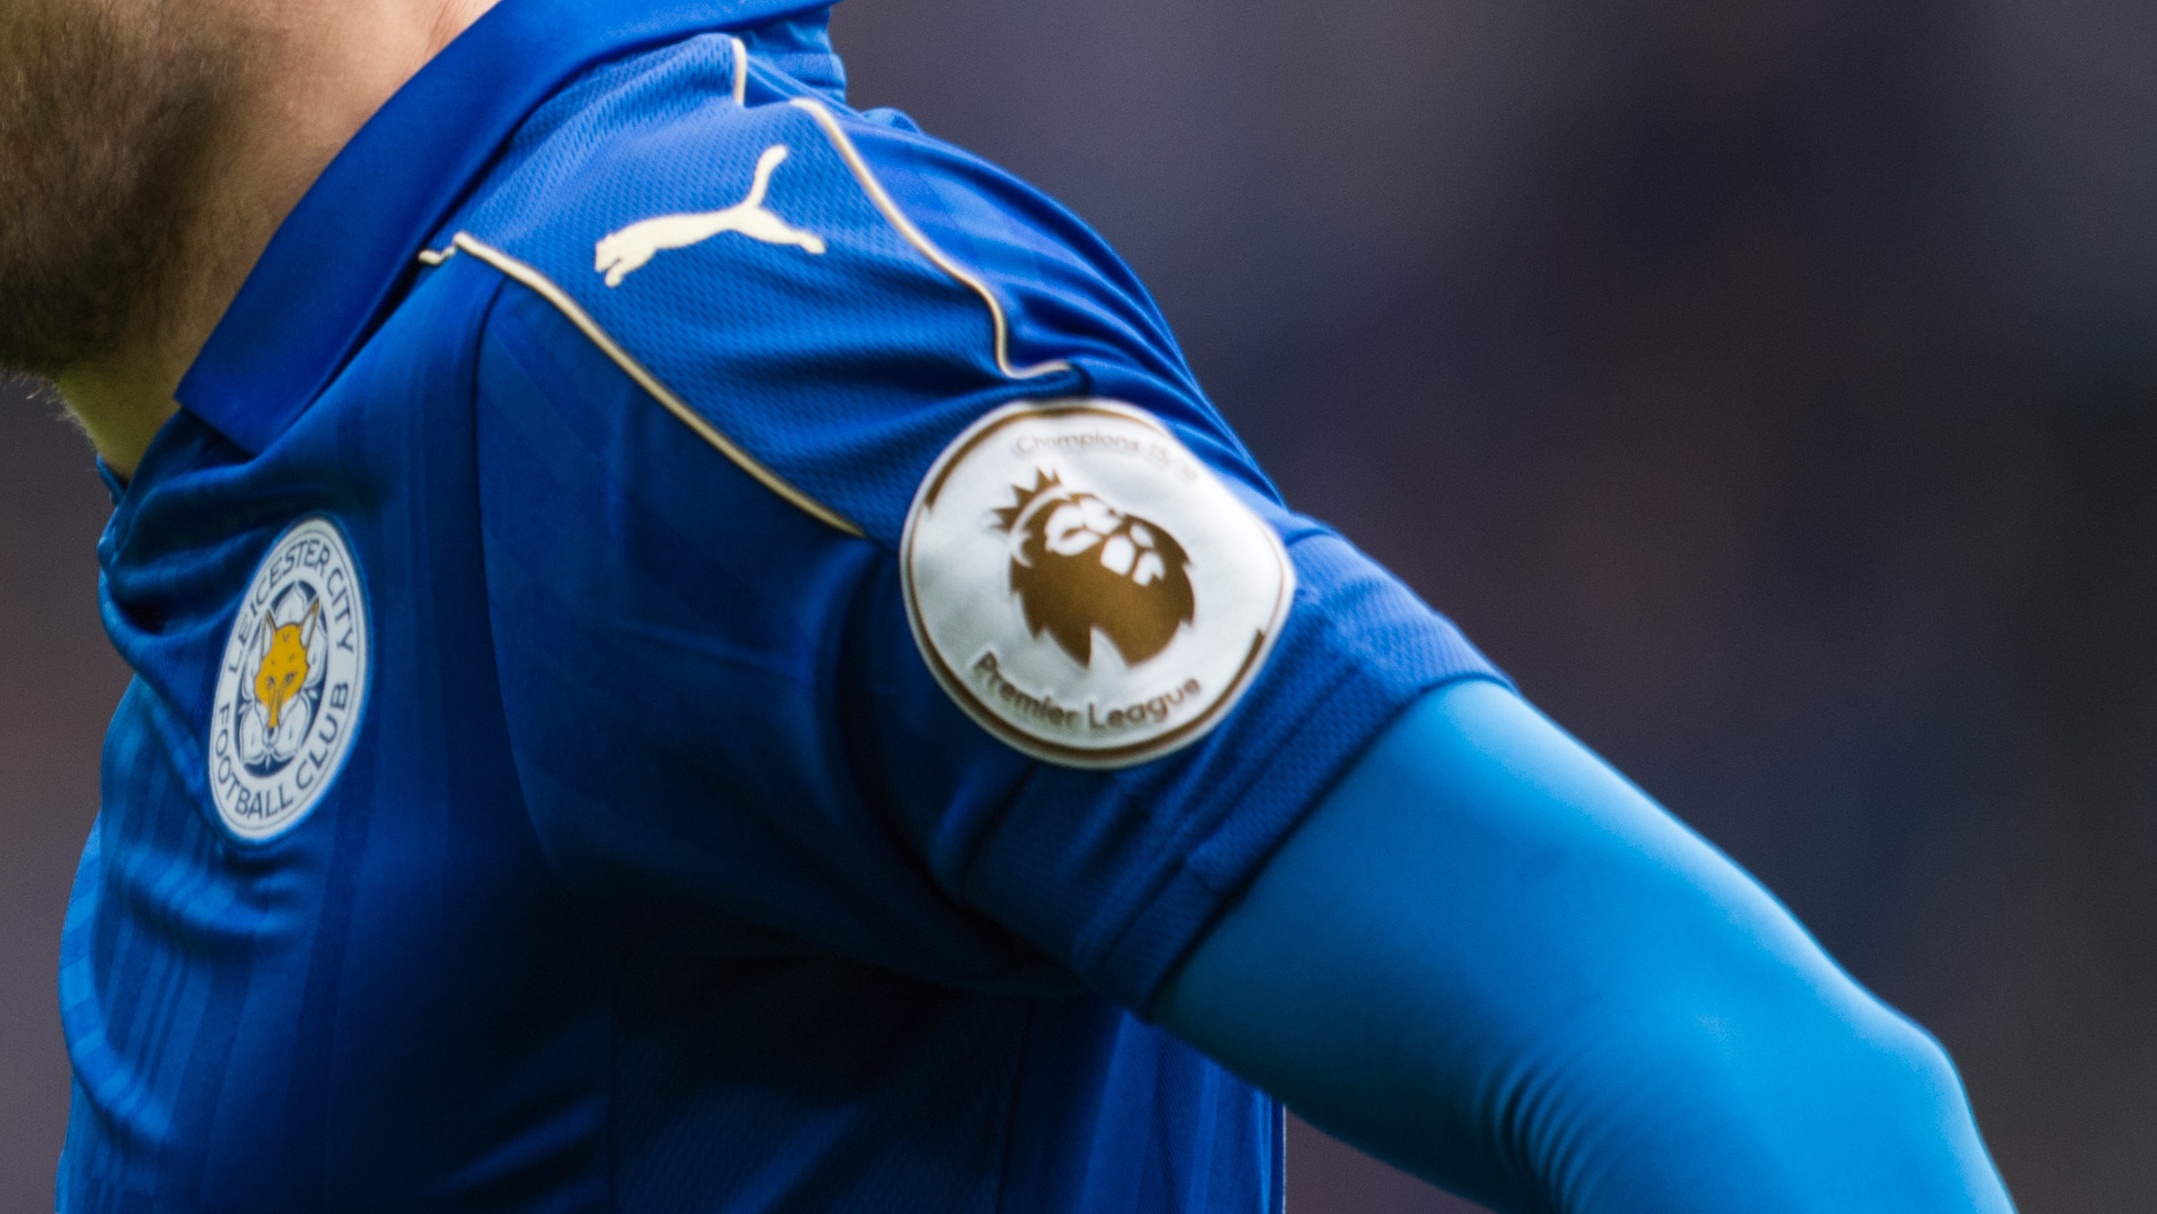 Leicester City's Premier League winners' badge